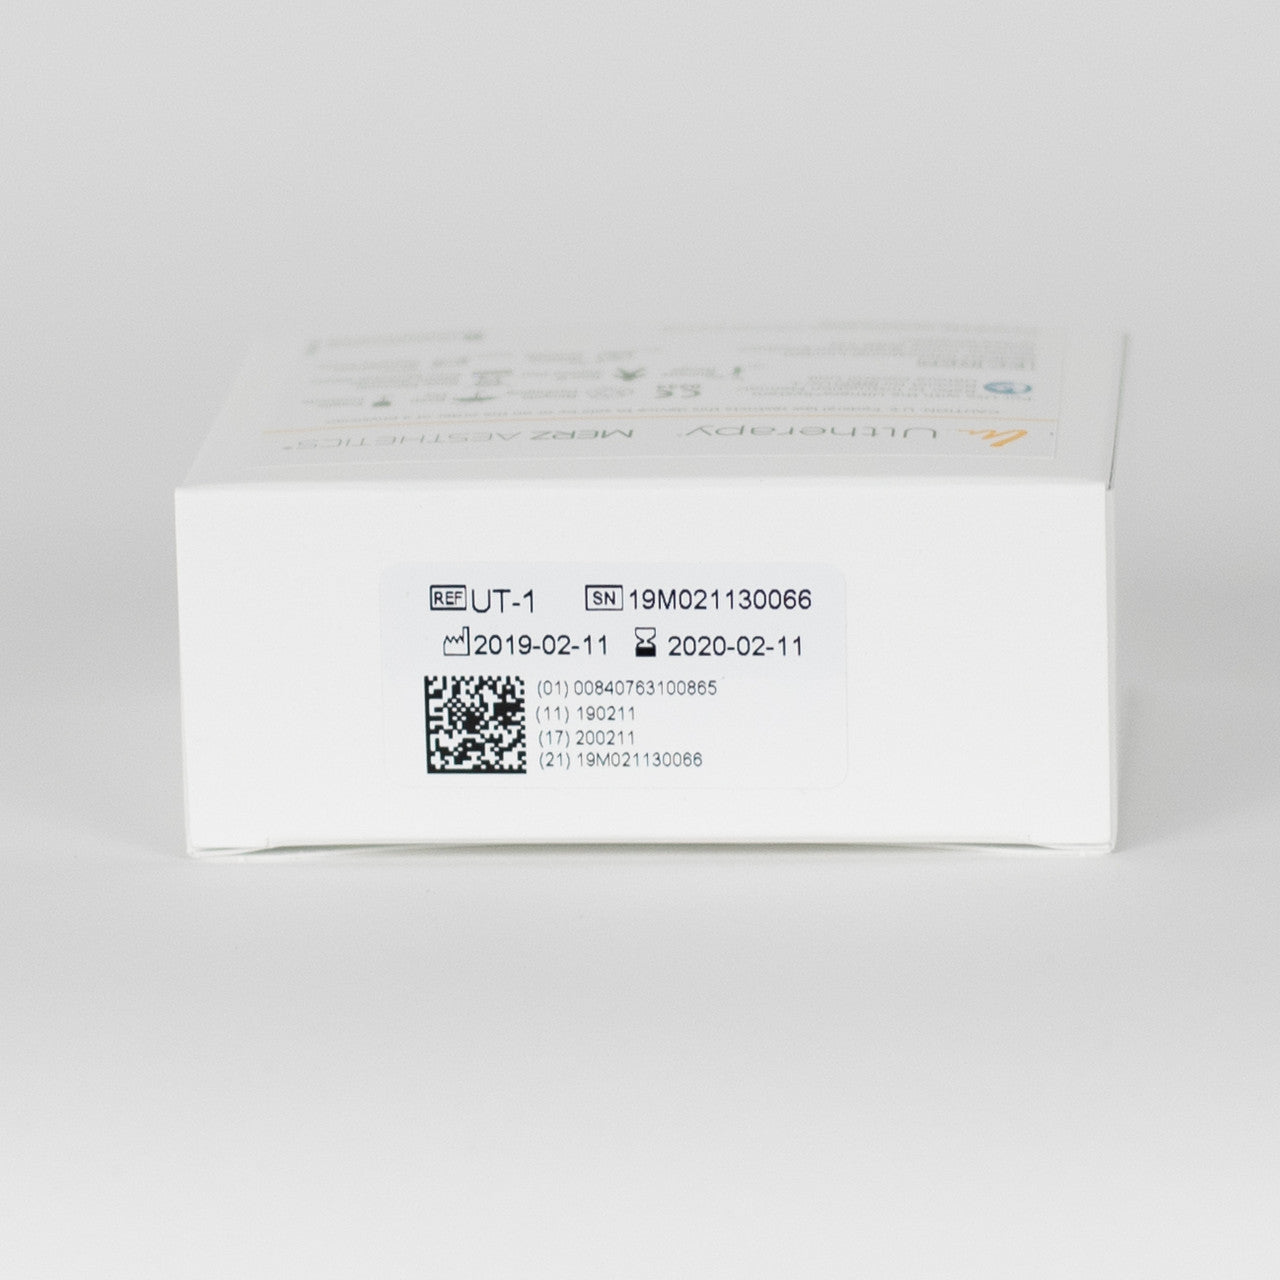 Ulthera DeepSEE DS 10 - 1.5 Narrow (Orange) Transducer Label